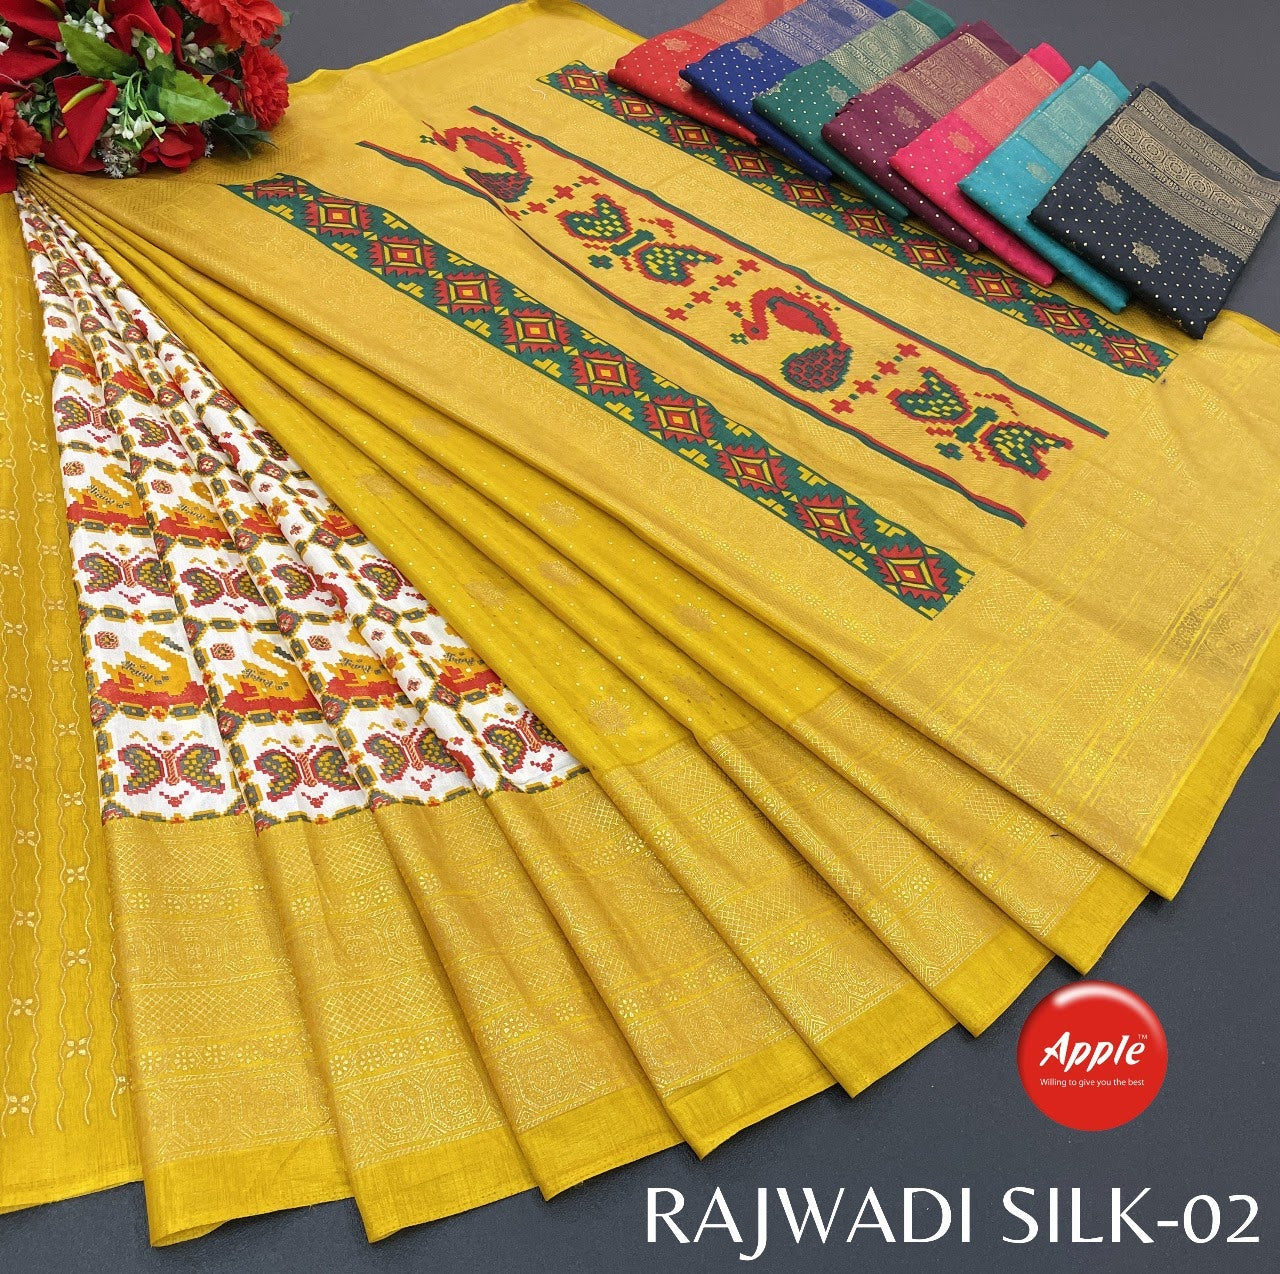 Rajwadi Silk 01, 02 Nd 03 Apple Sarees